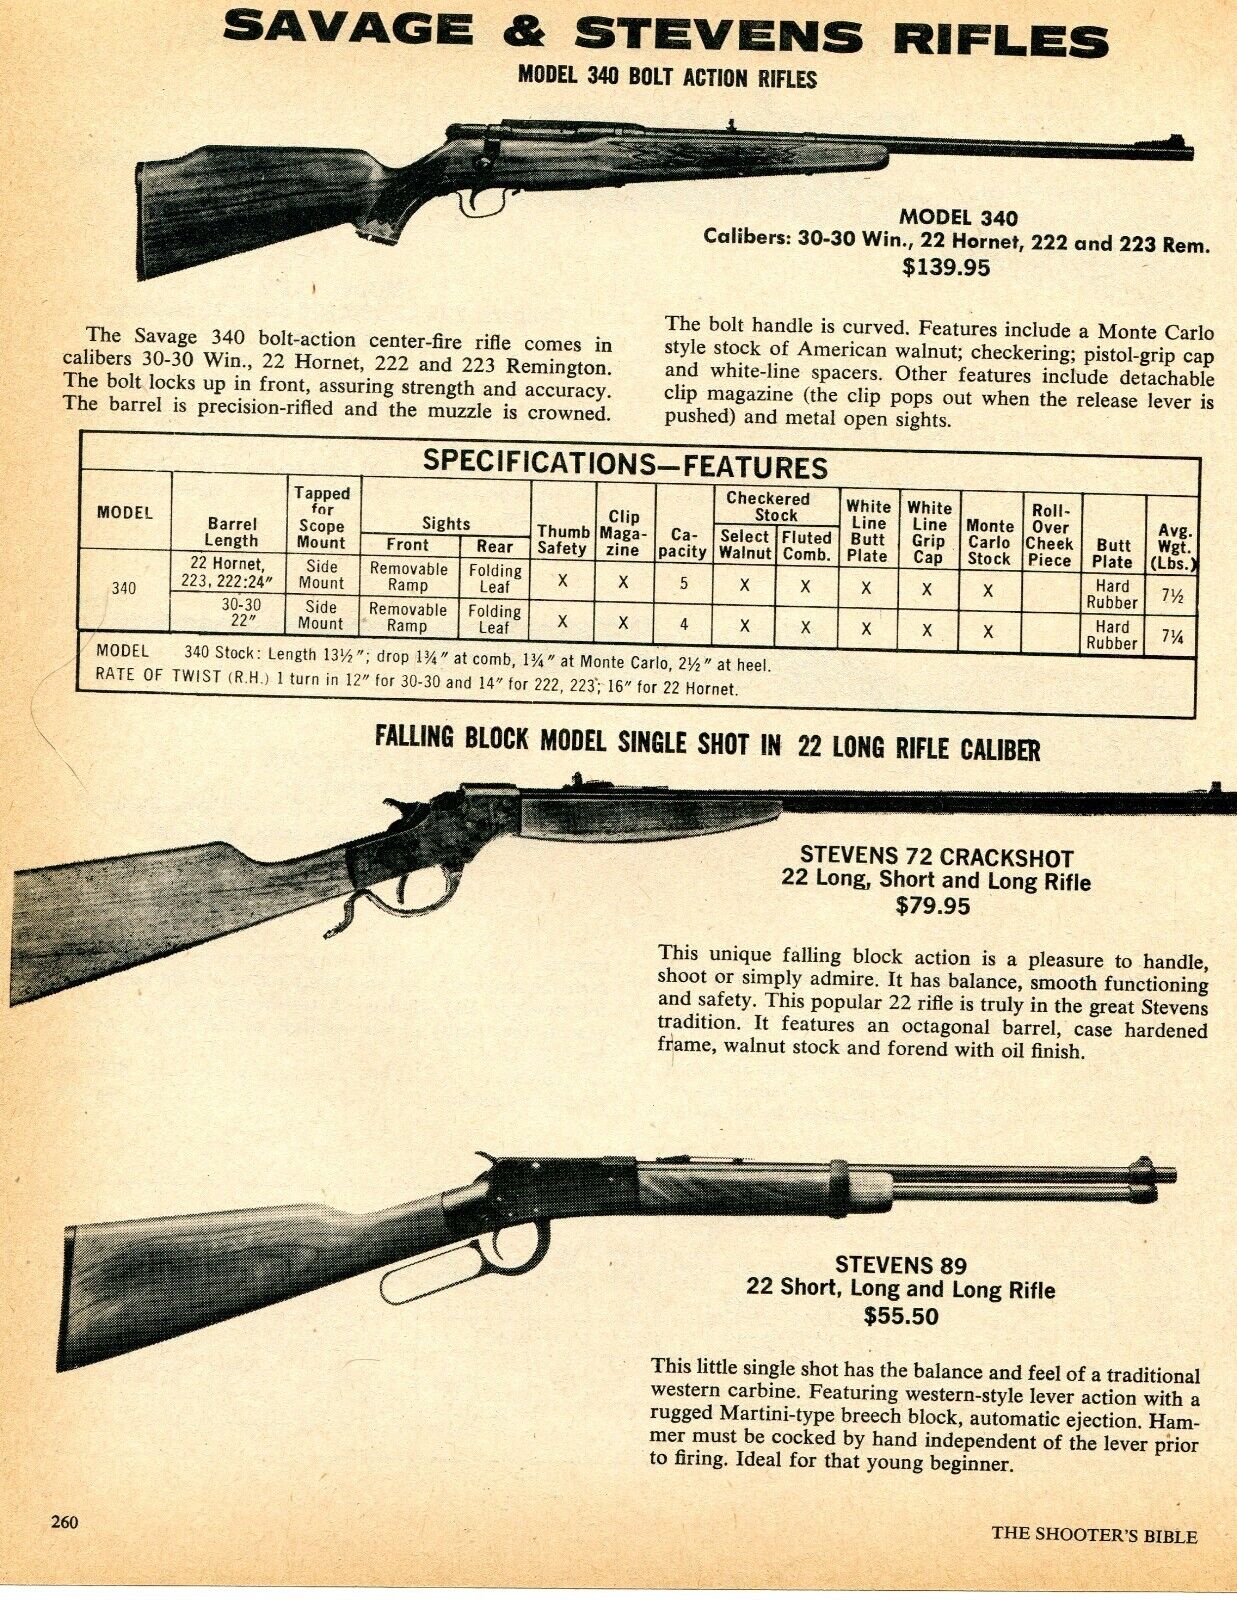 1979 Print Ad of Savage Model 340, Stevens 72 Crackshot & 89 Long Rifle